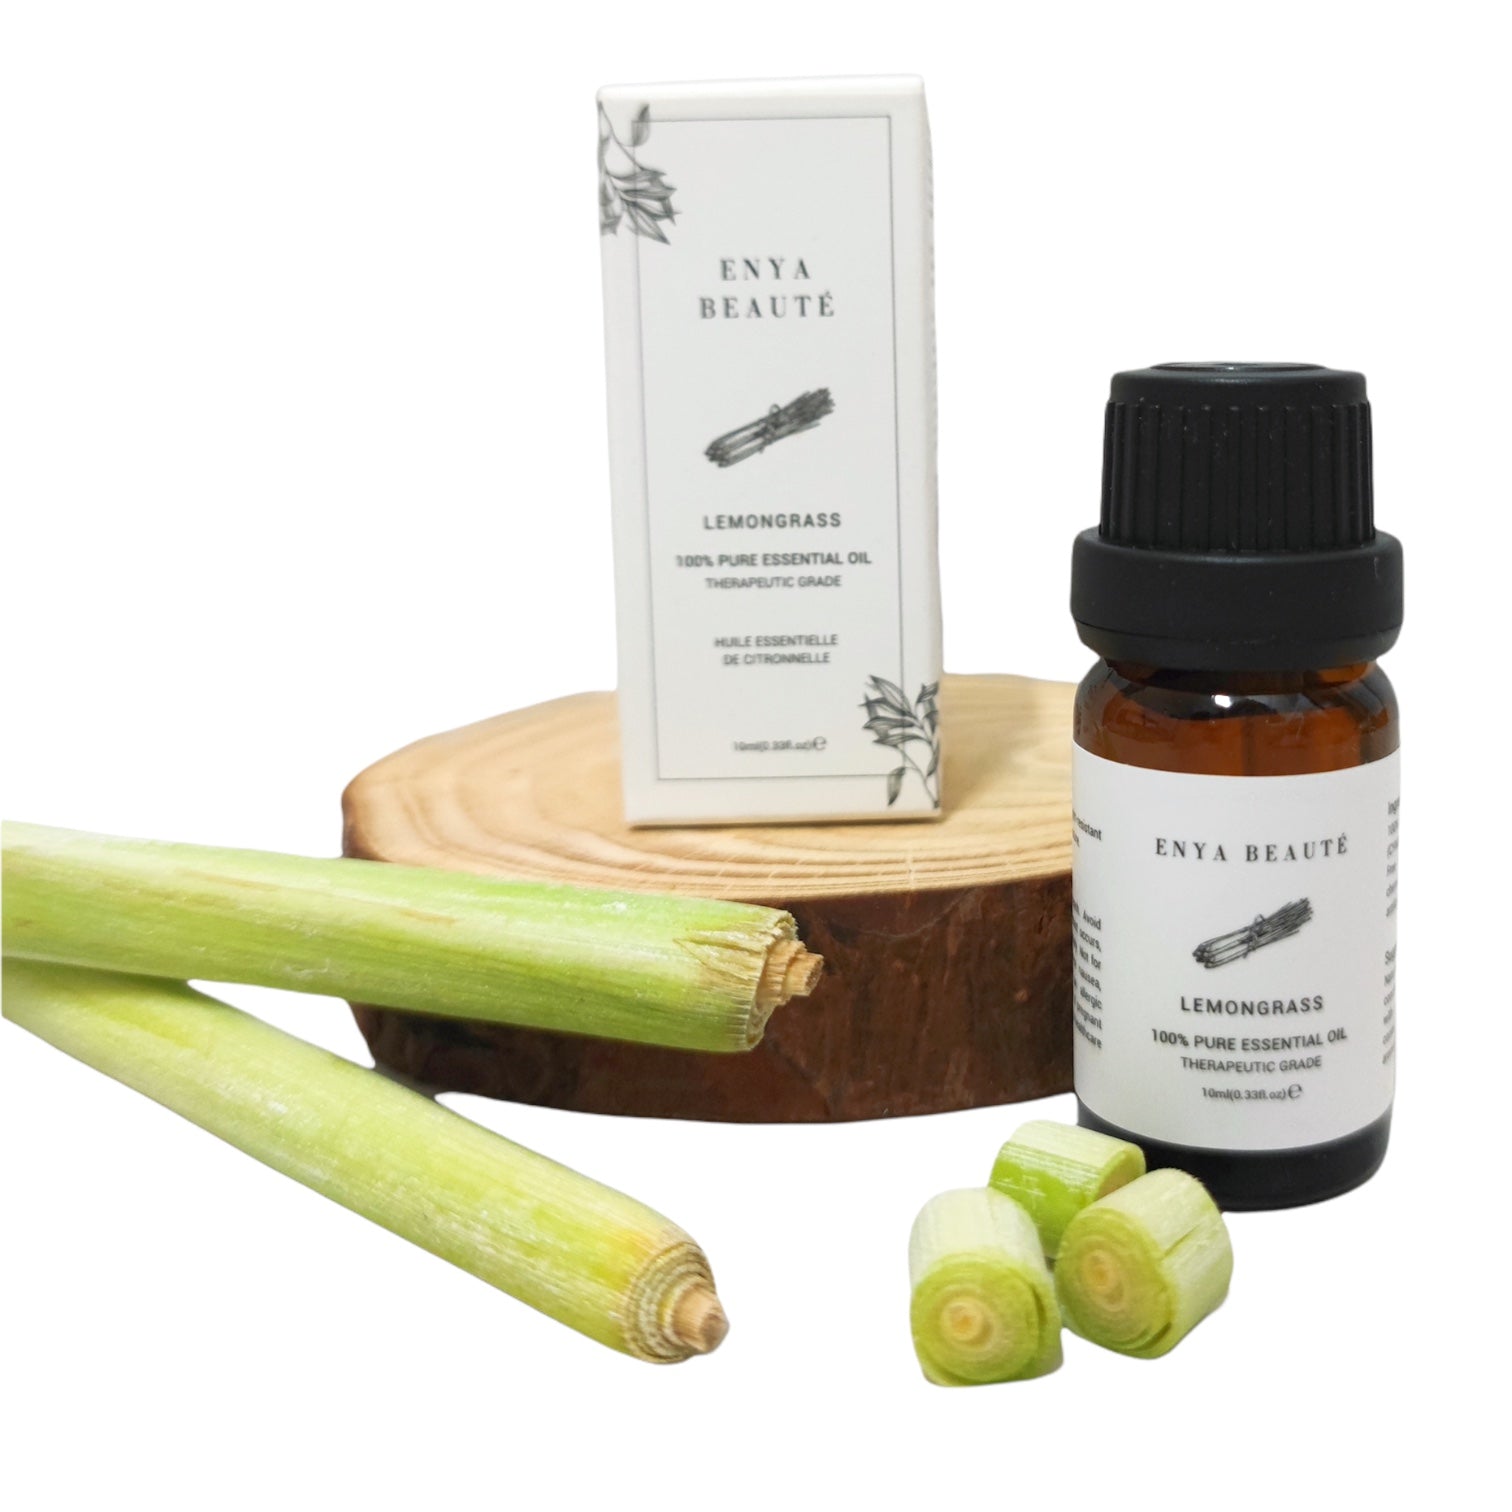 Enya Beauté 100% Pure Essential Oil - Lemongrass